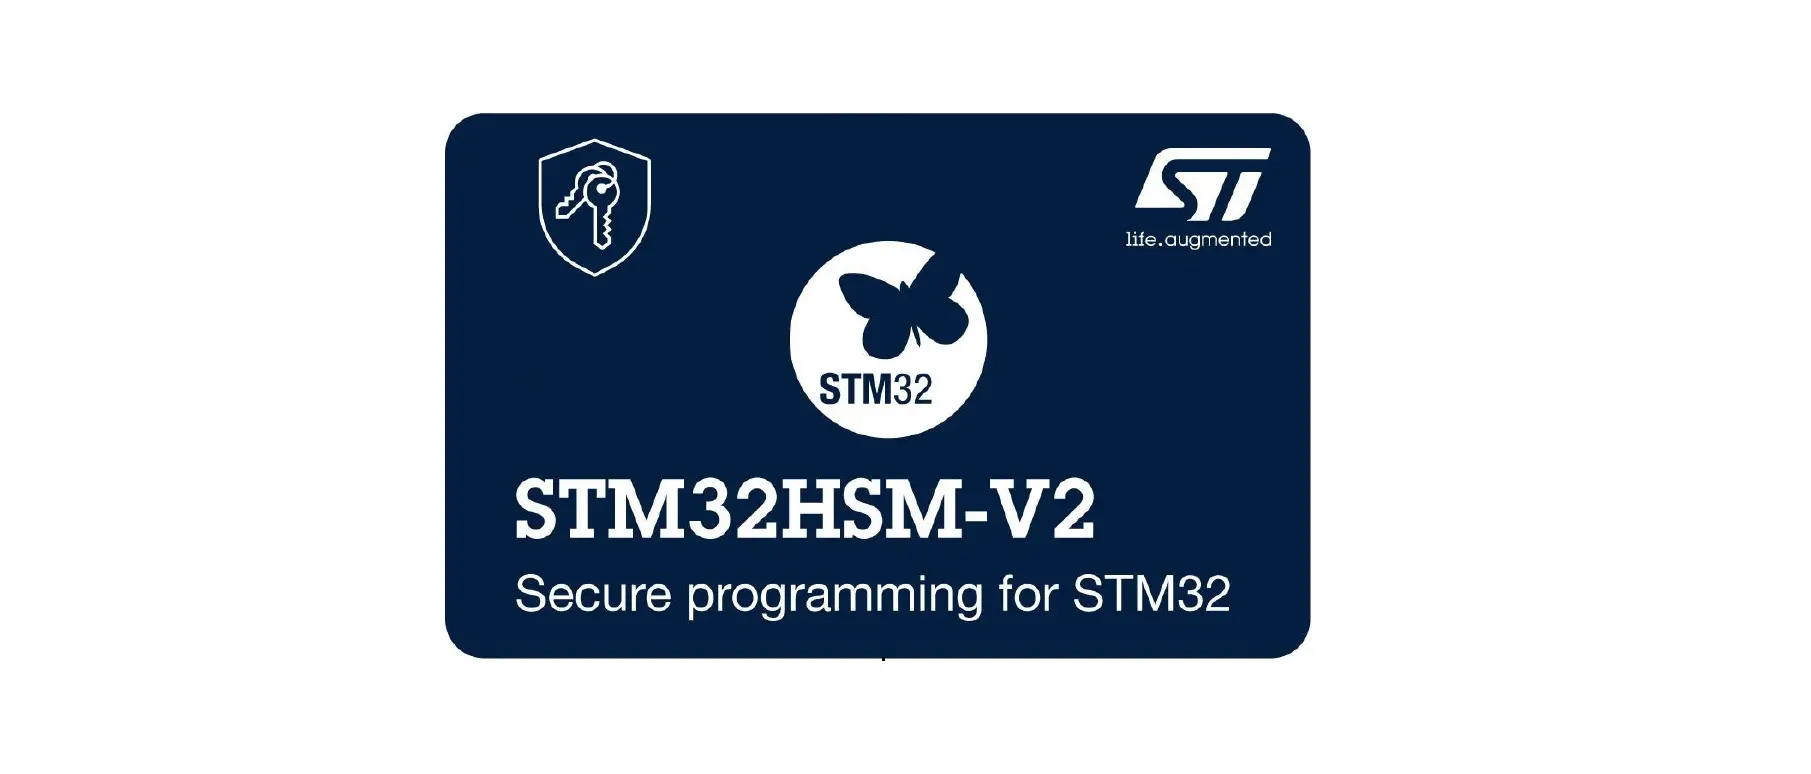 STM32HSM-V2